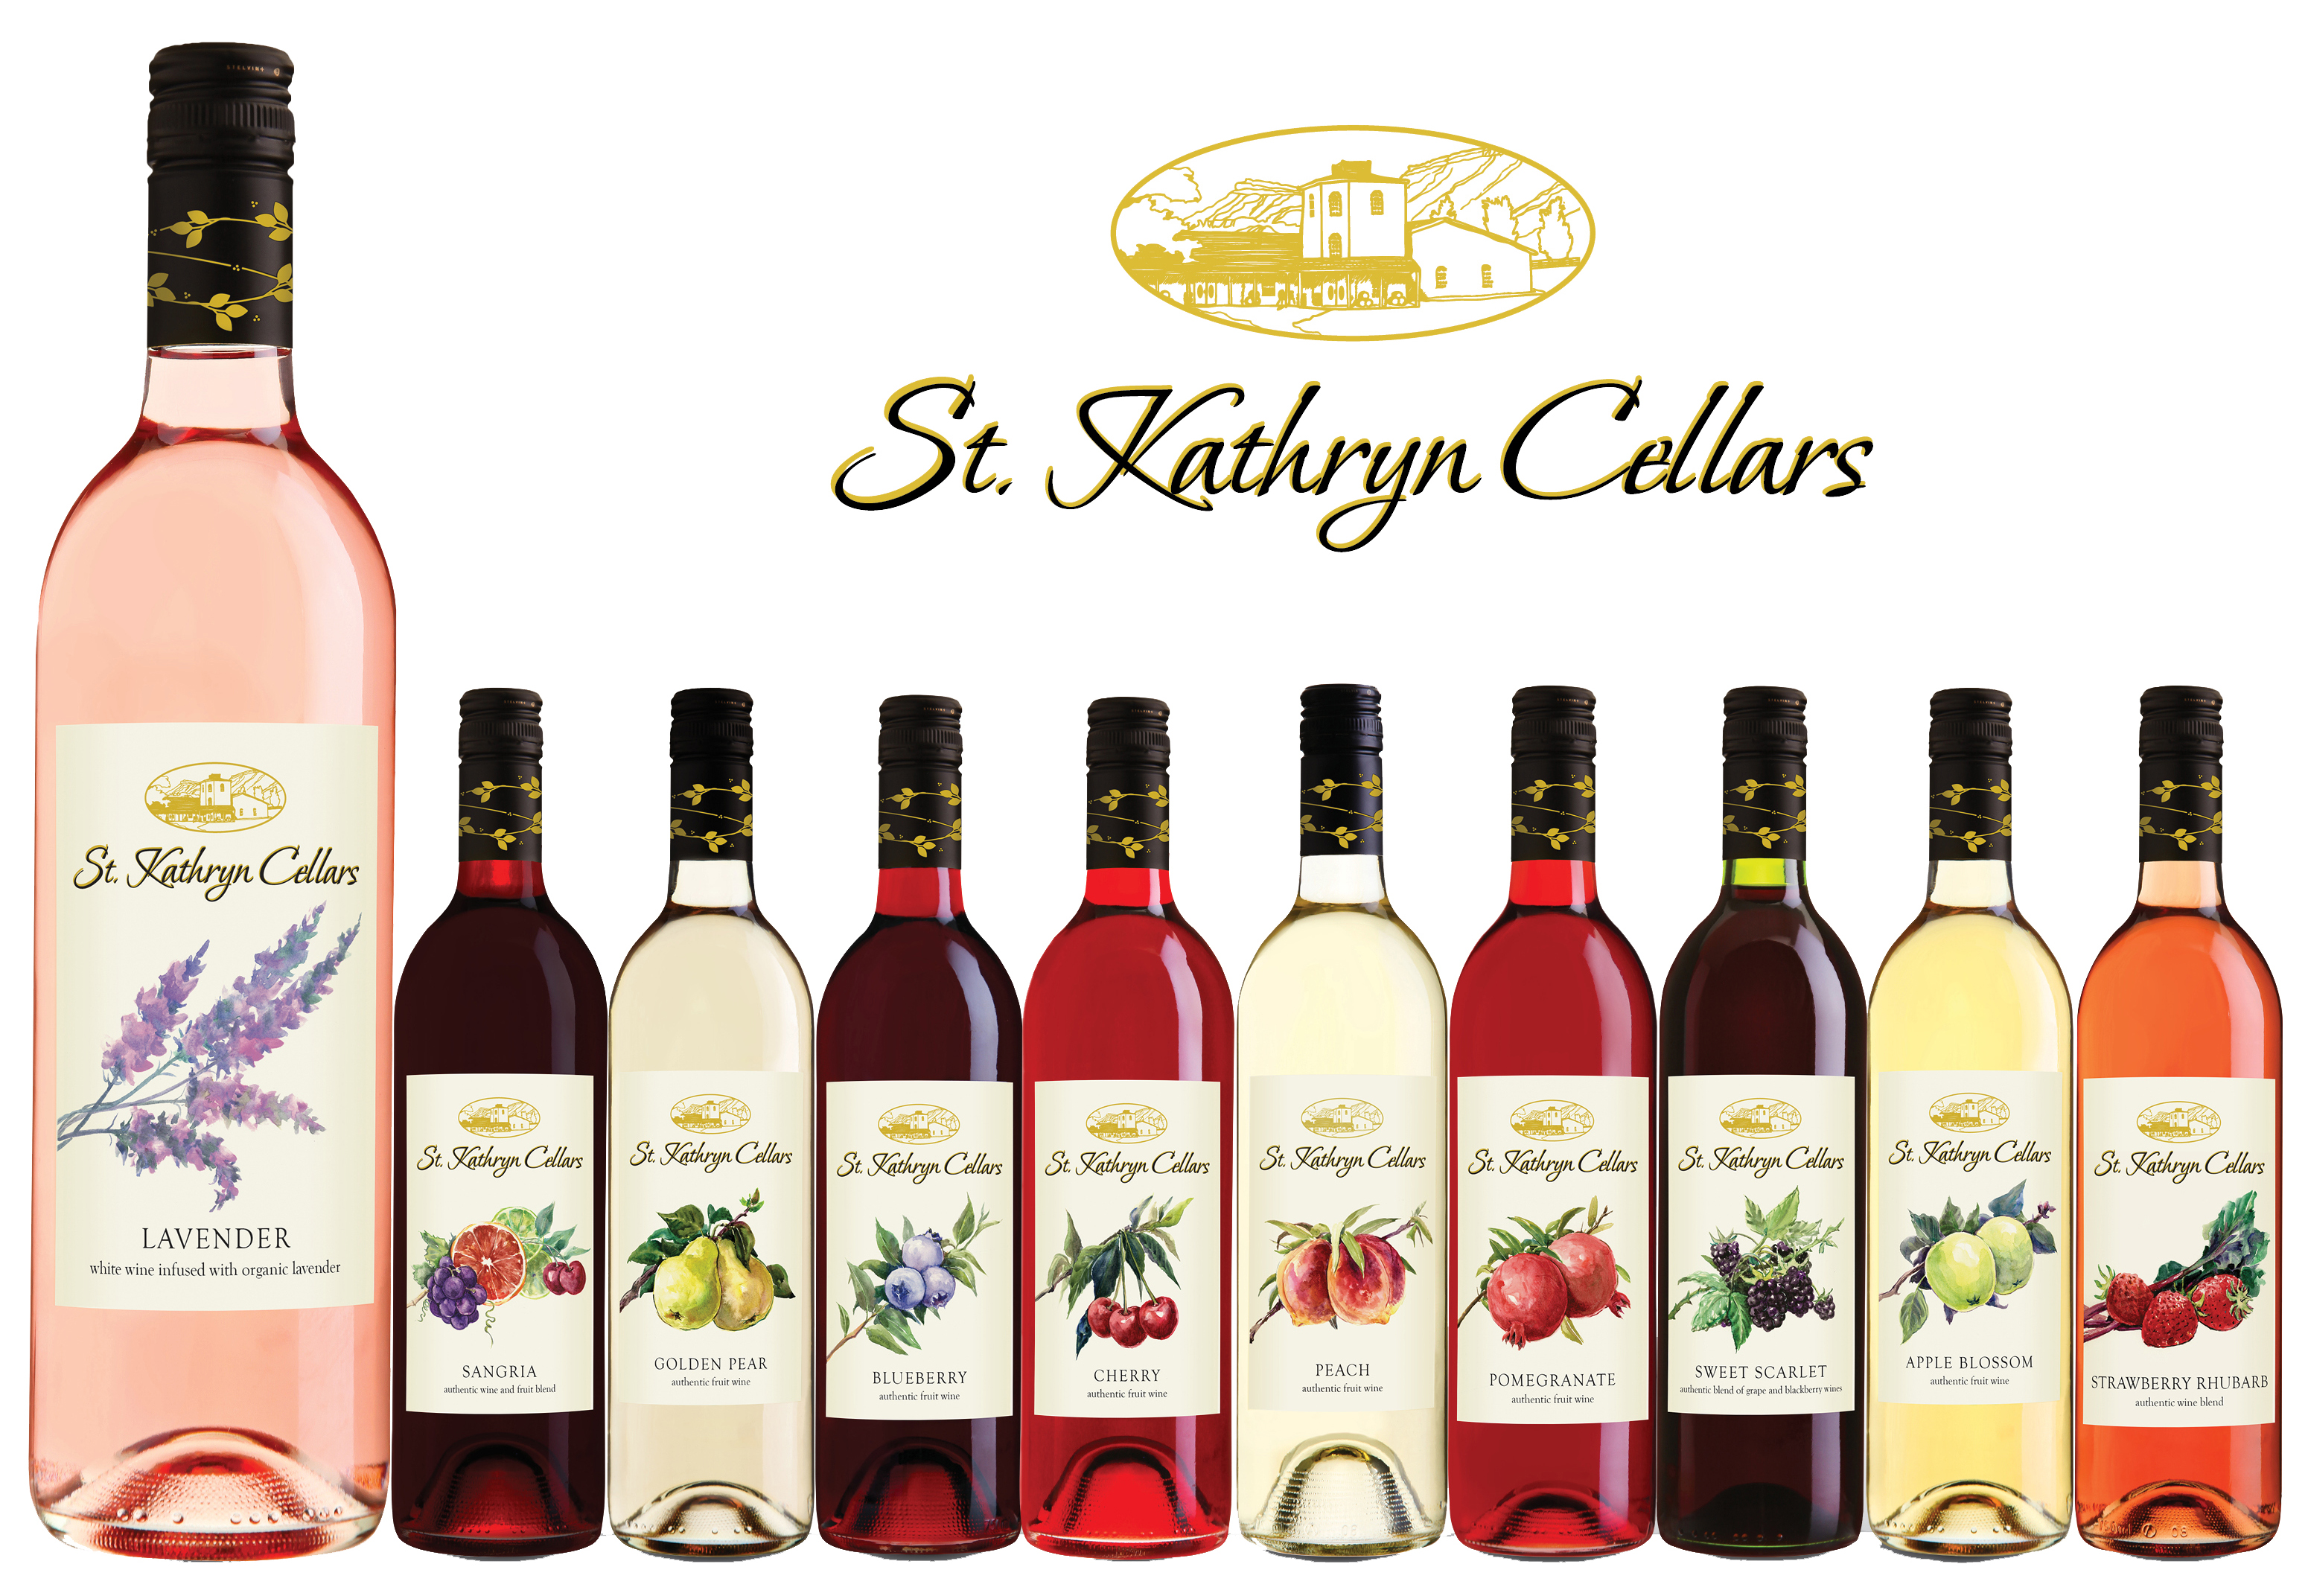 St. Kathryn Cellars Brand